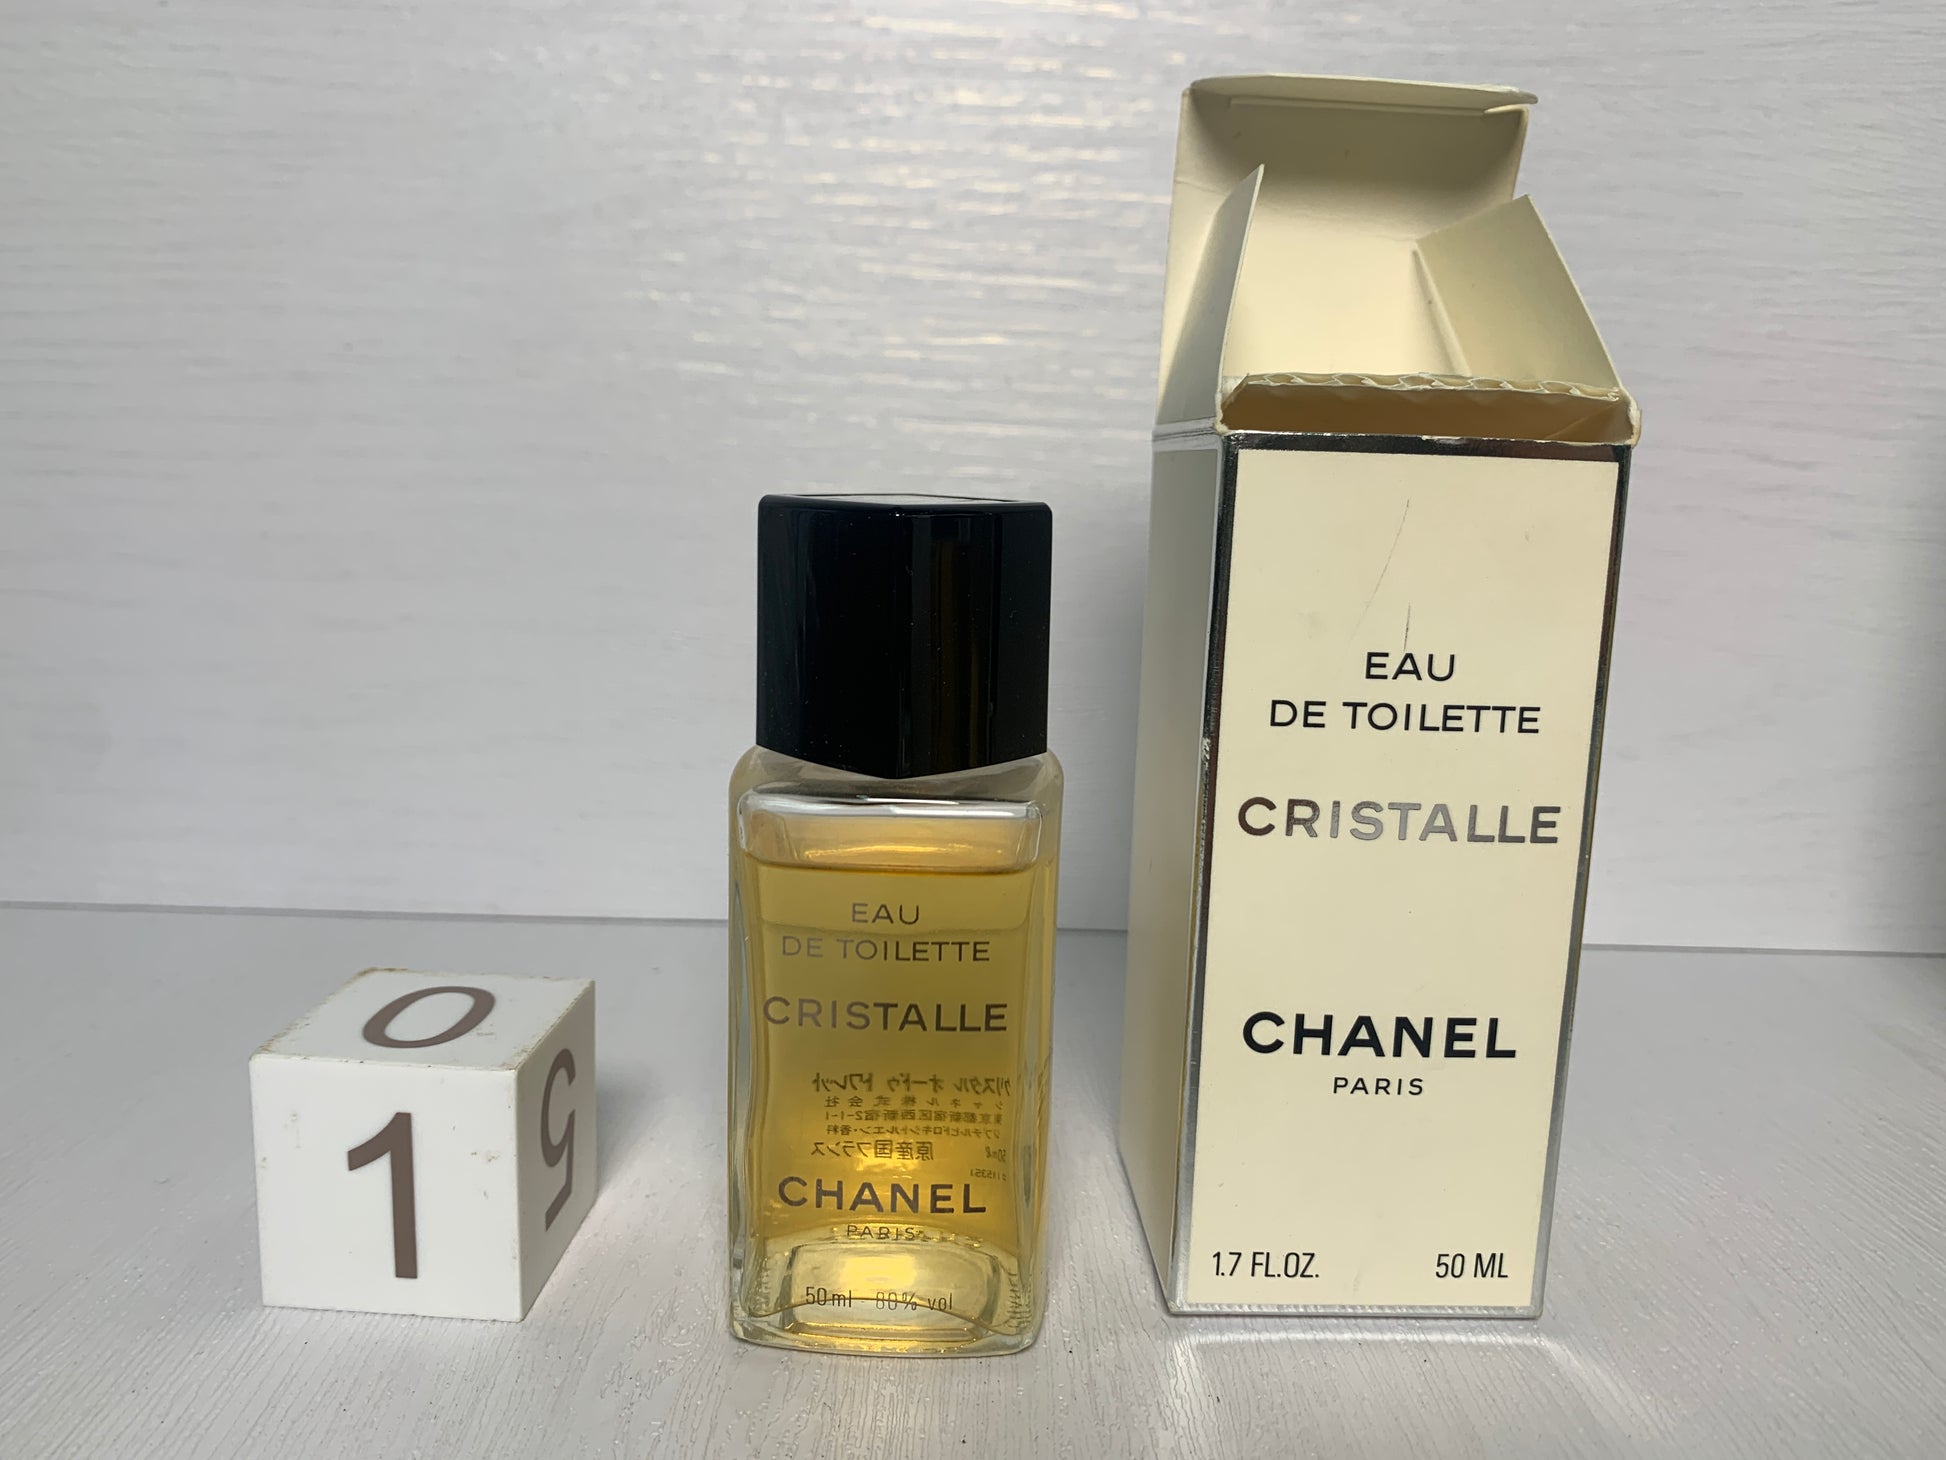 Rare Chanel coco parfum perfume 7ml 15ml 30ml - 12DEC22 – Trendy